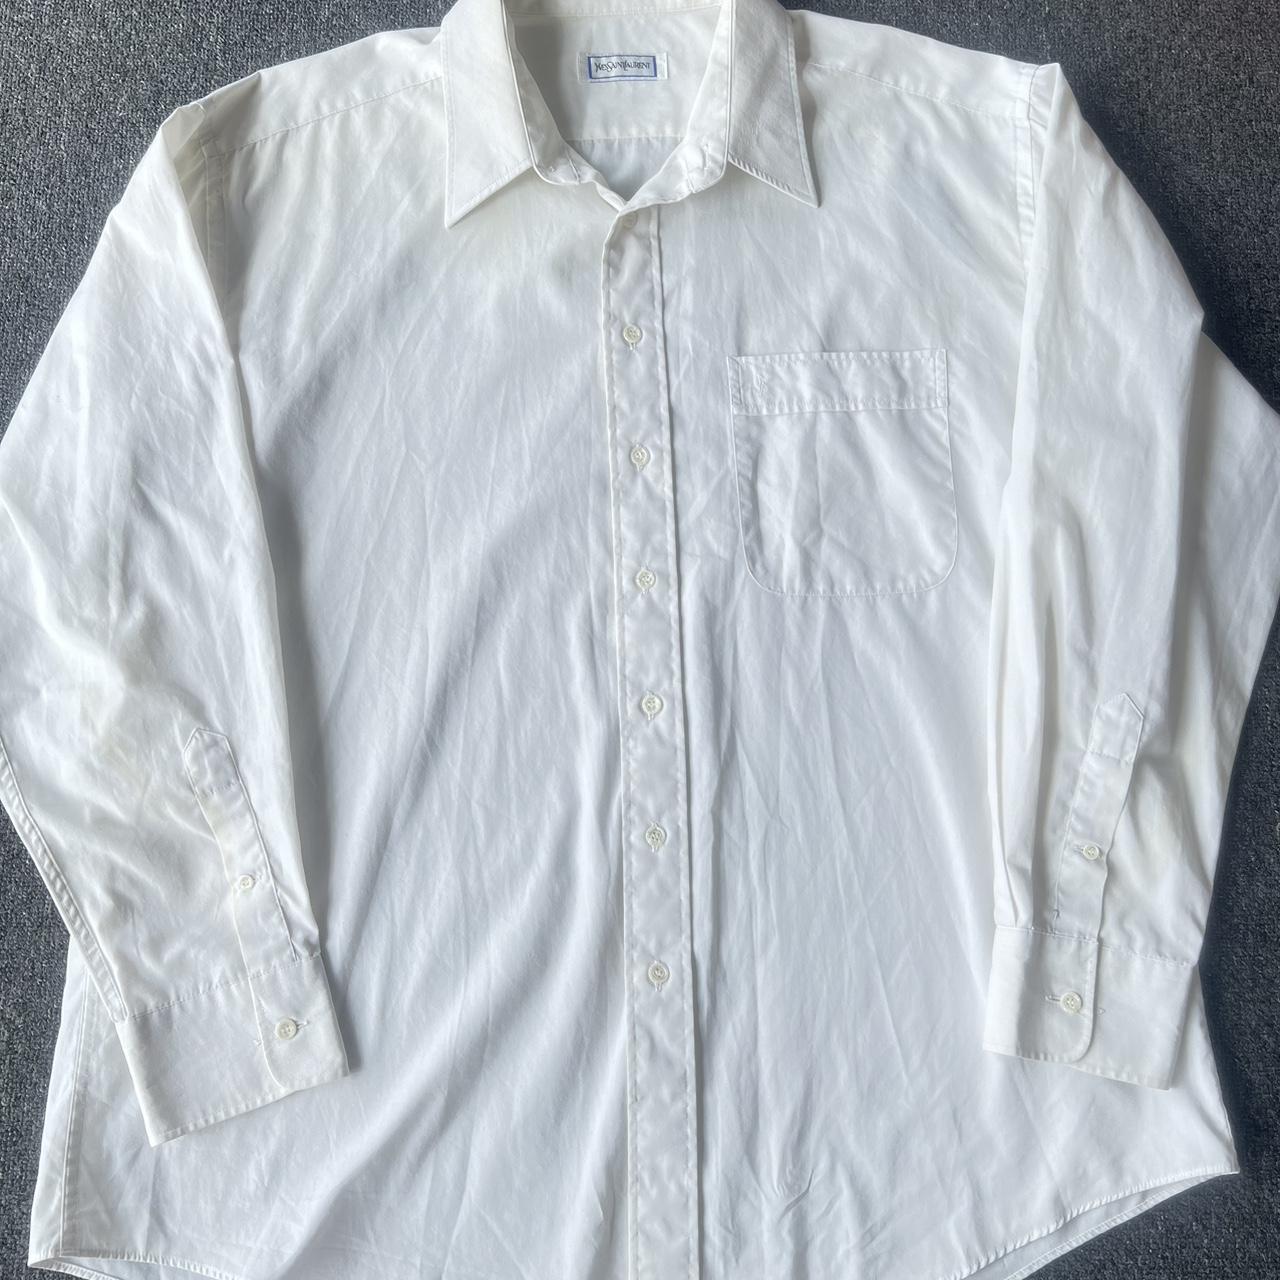 Vintage Ysl shirt size Large - perfect condition... - Depop